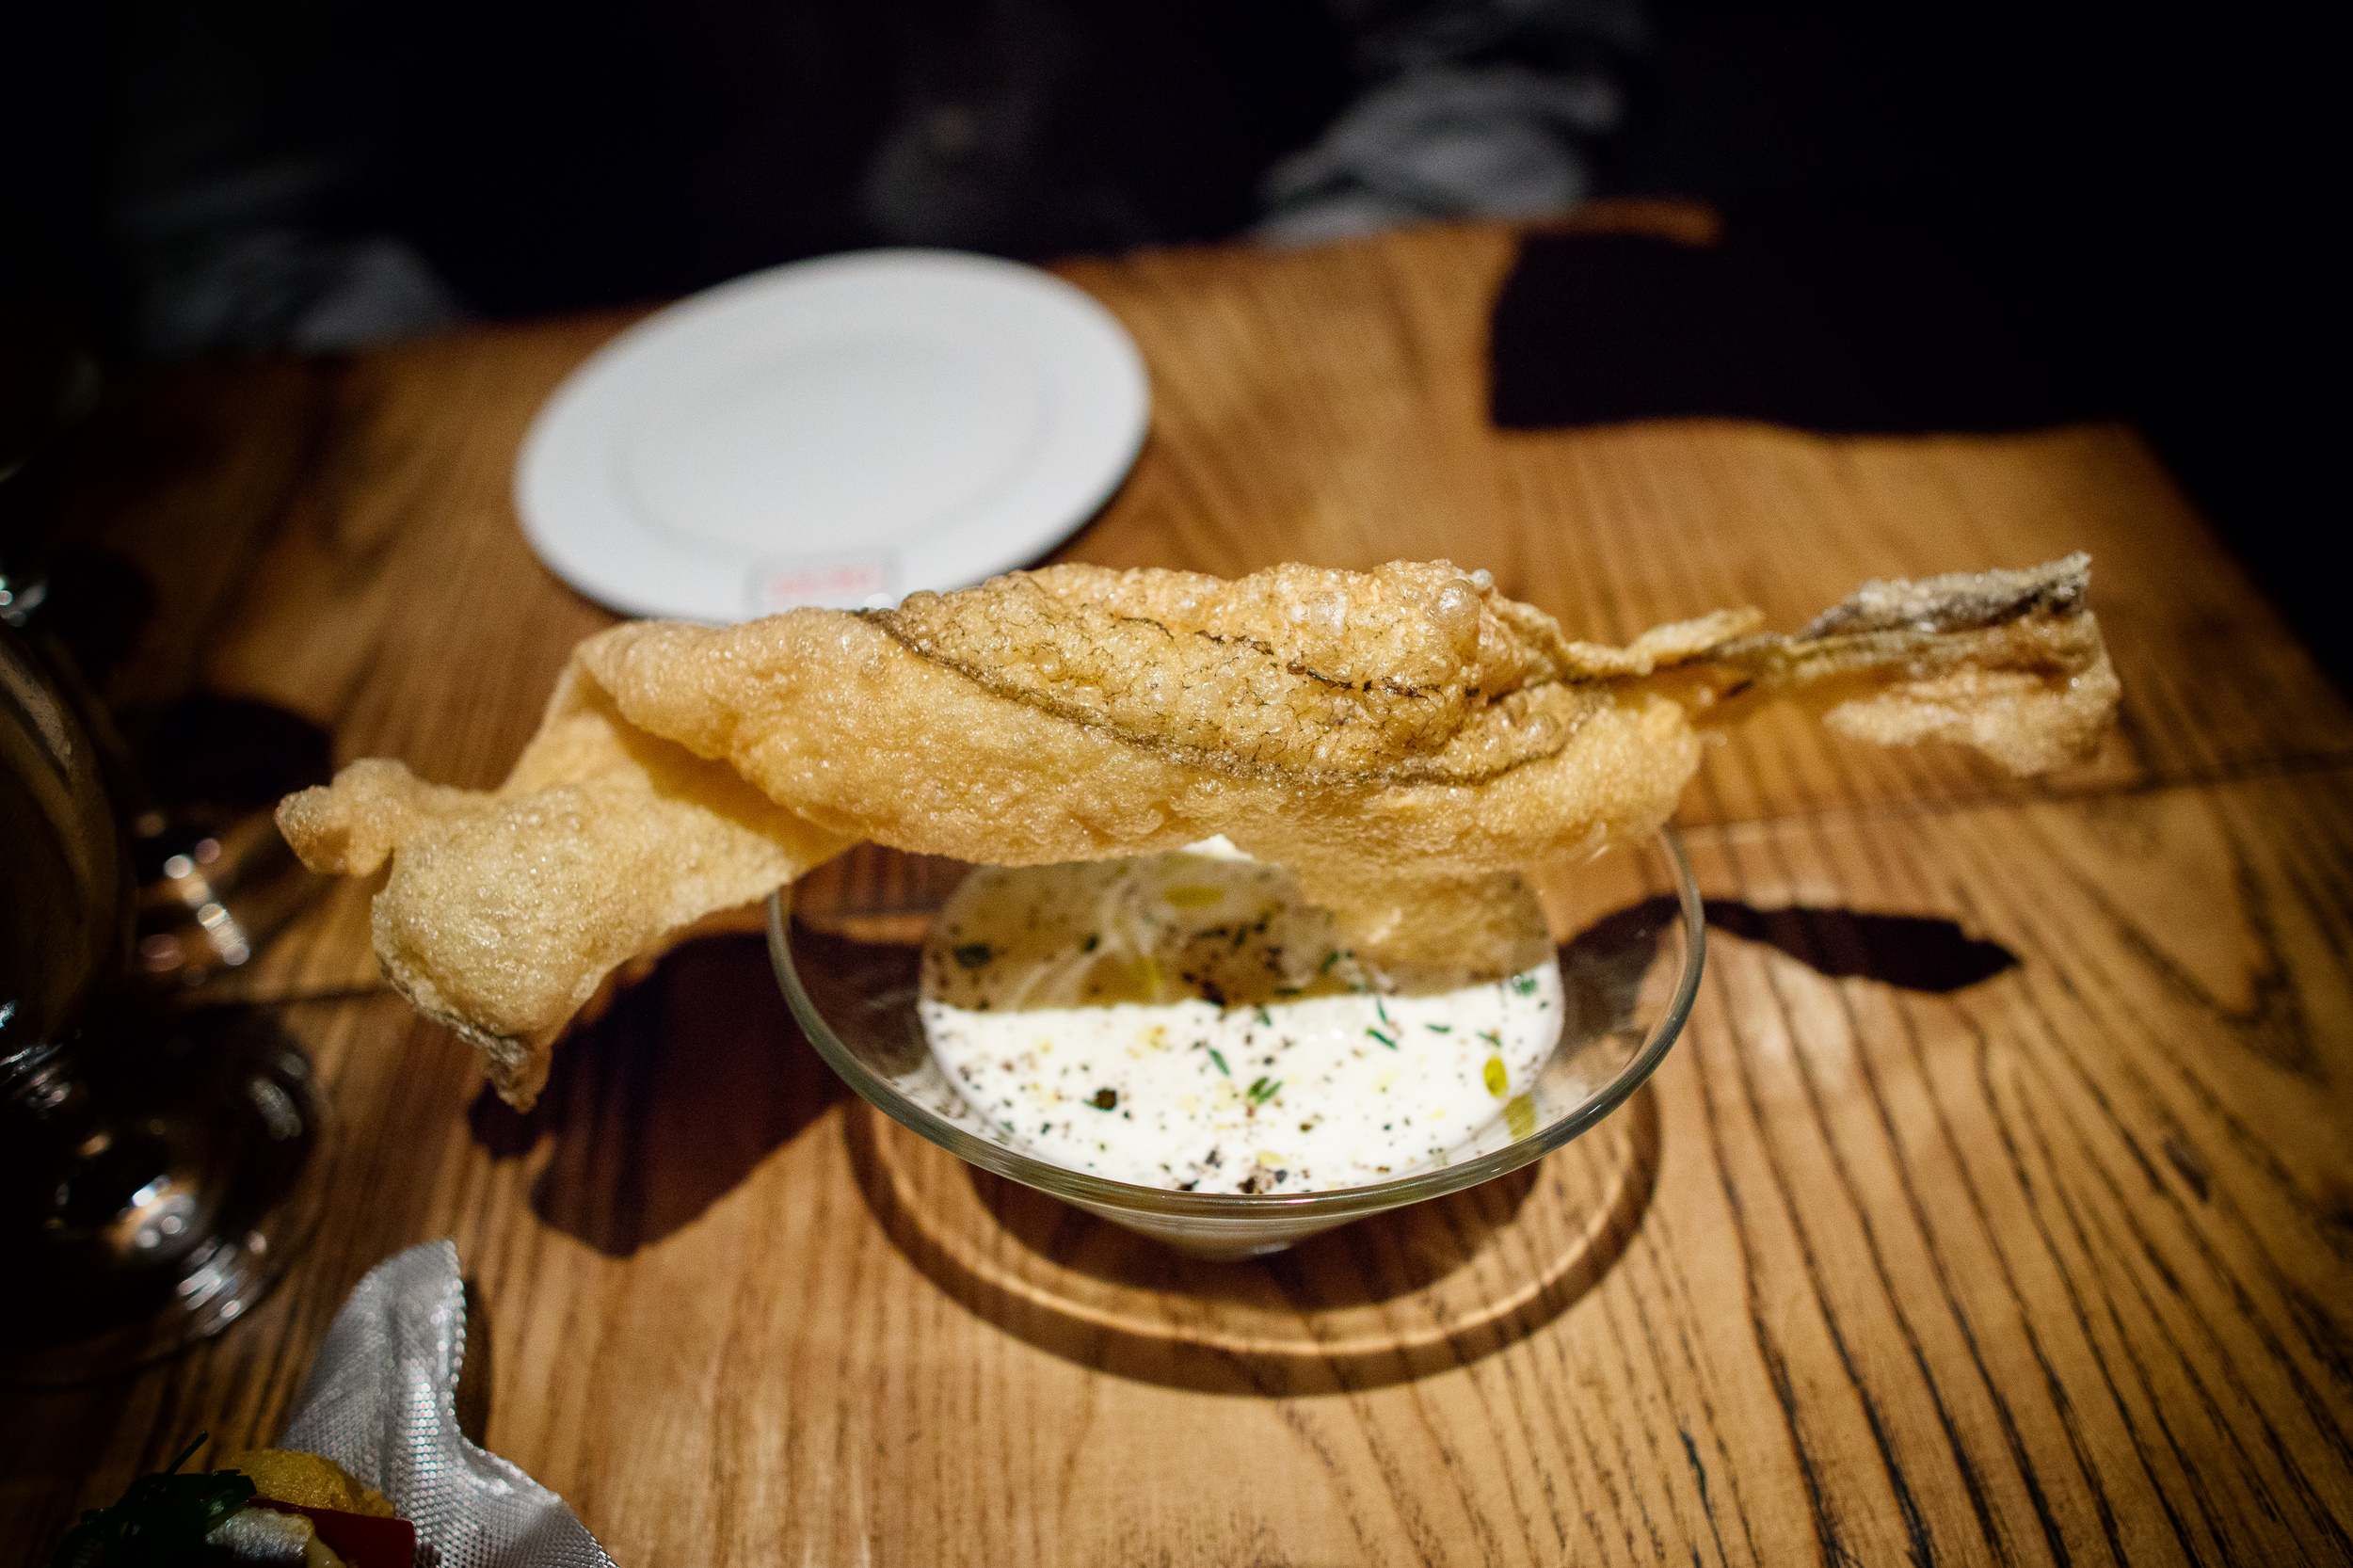 Brandada crujiente (Crispy salt cod)